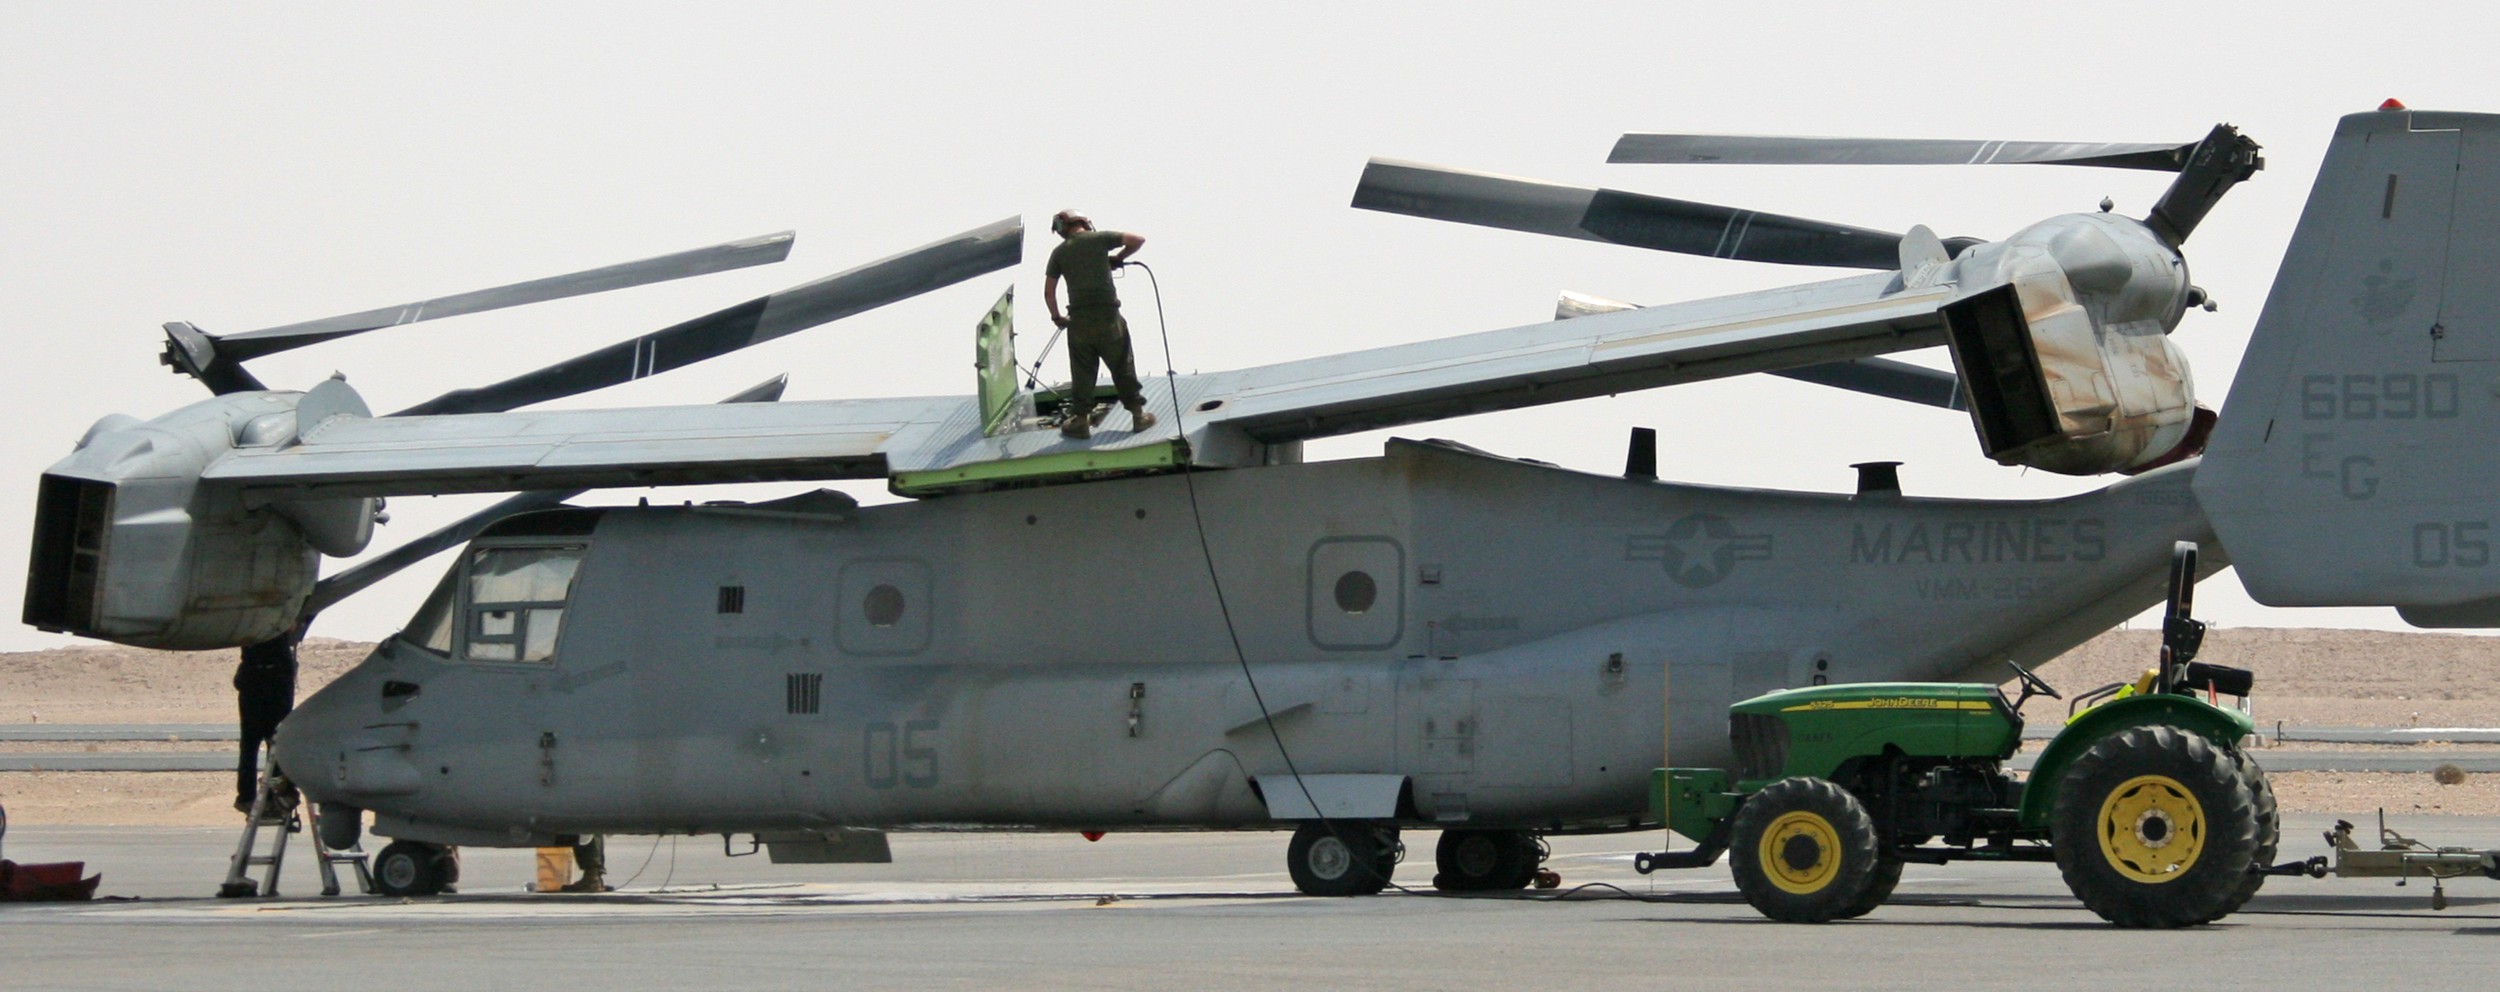 marine medium tiltrotor squadron vmm-263 thunder chickens mv-22b osprey udairi army airfield kuwait 2009 107